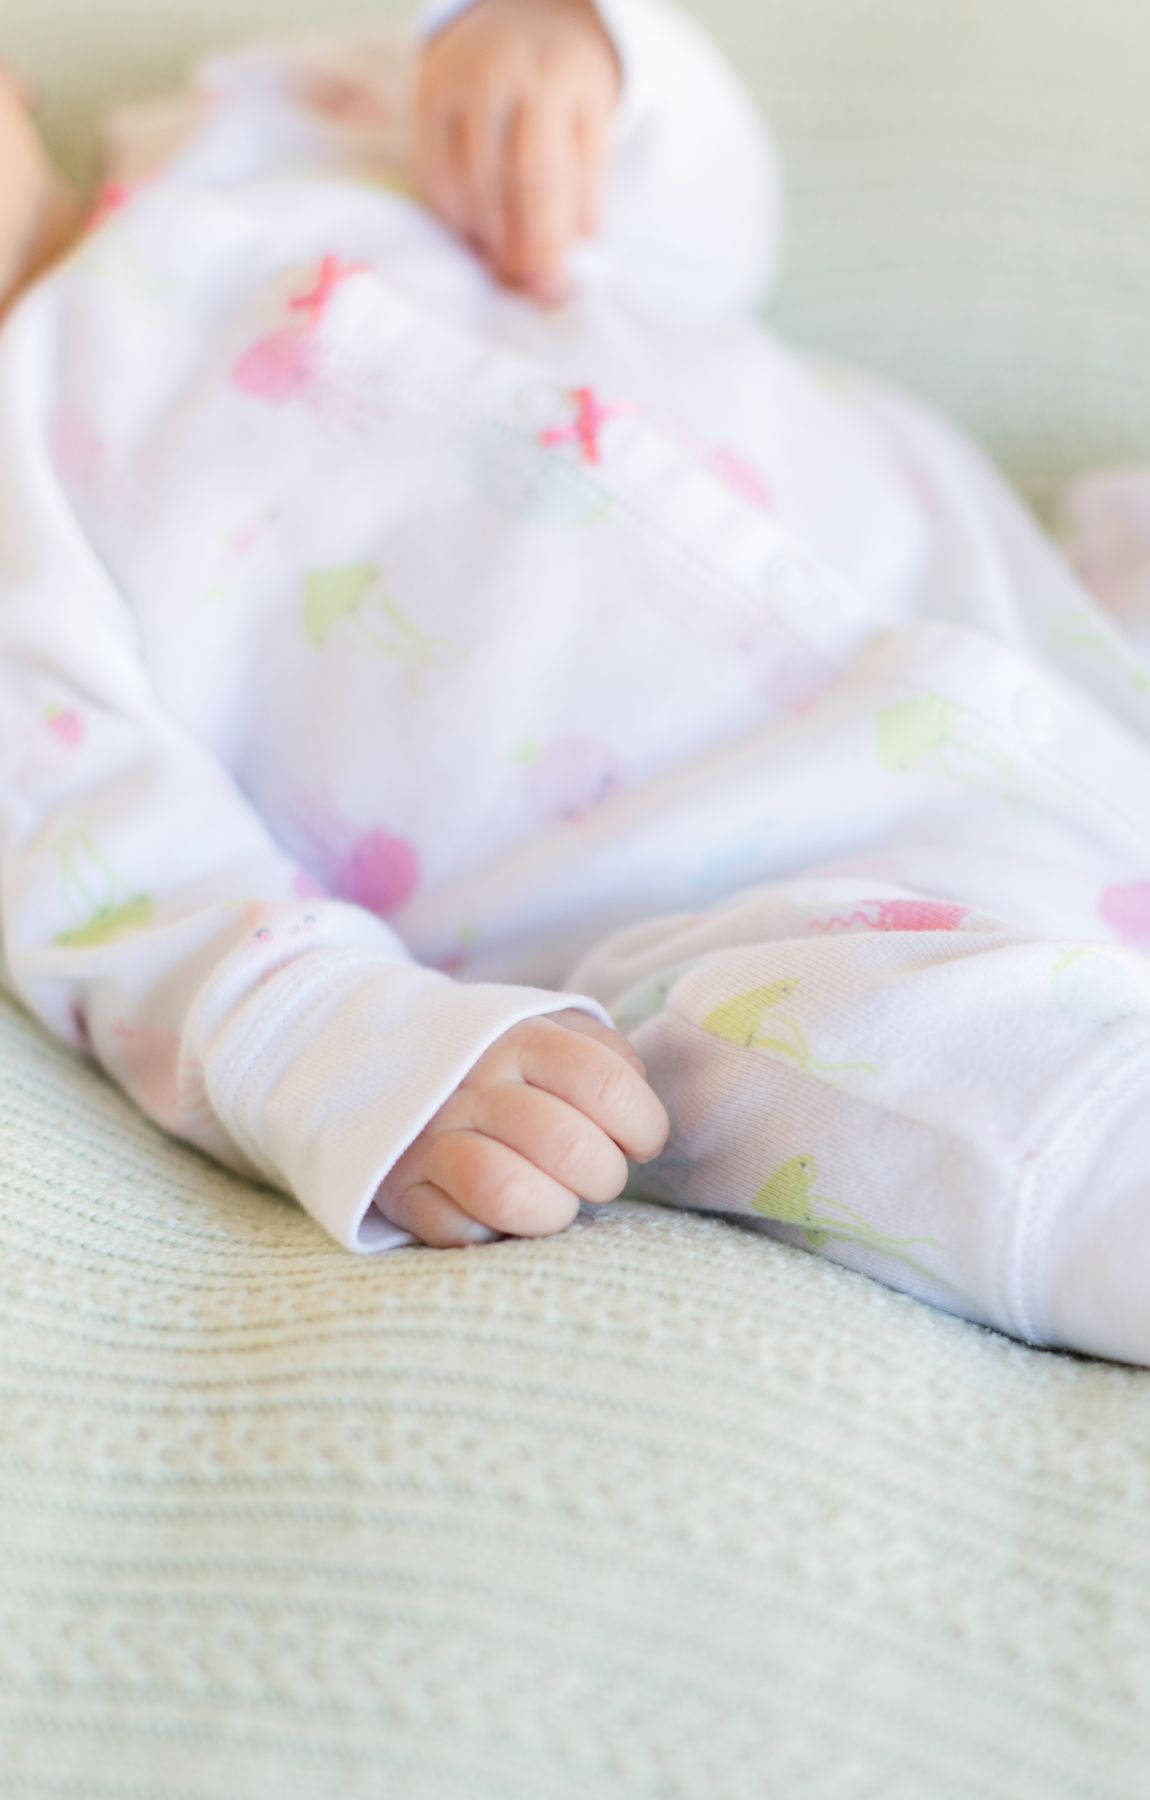 Baby Hand Peacefully Sleeping Wallpaper